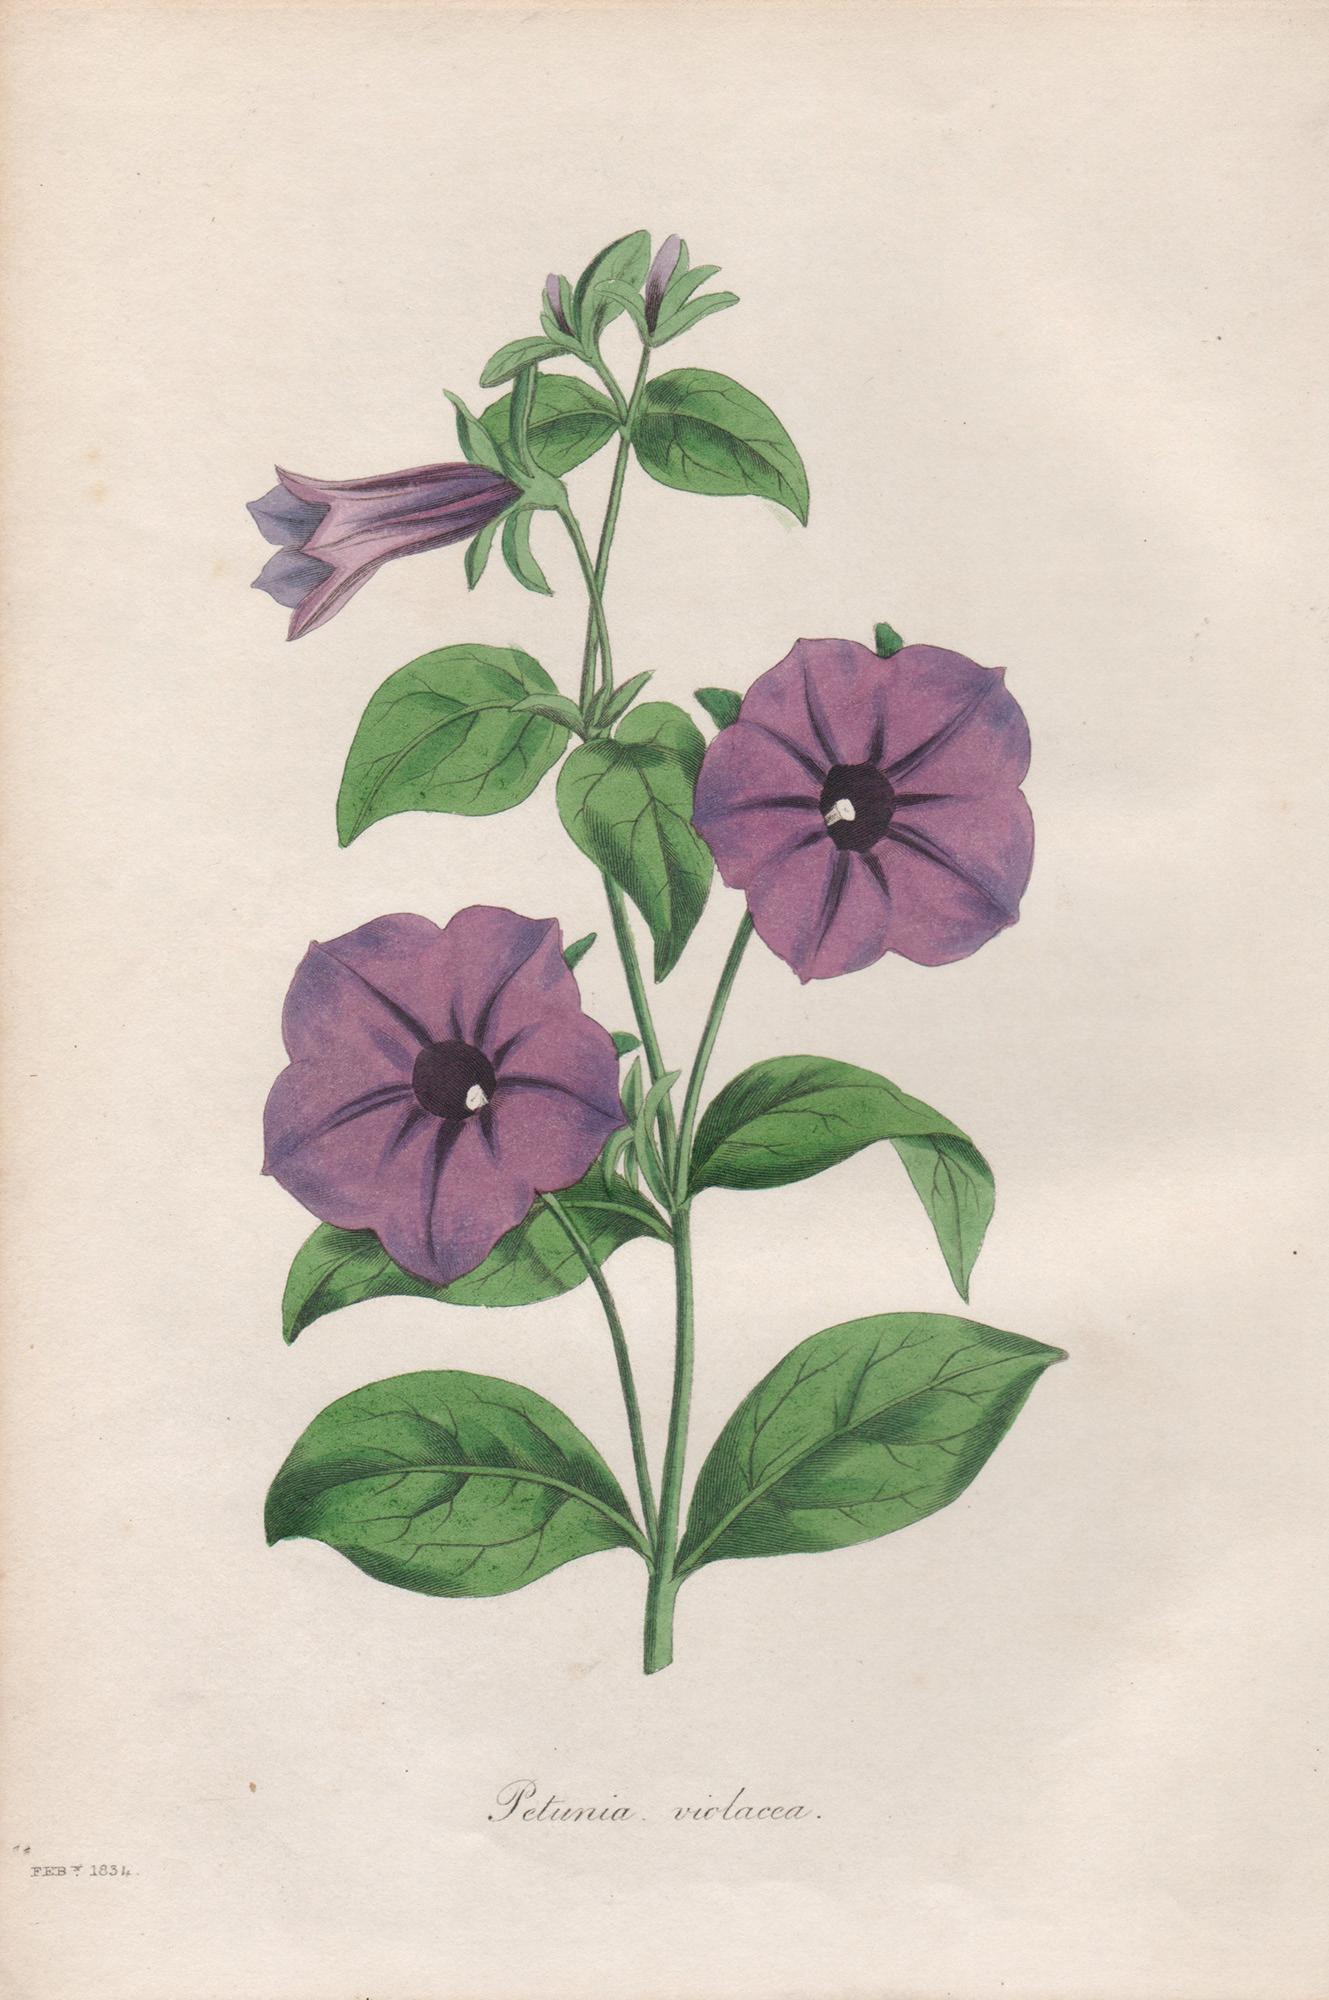 Frederick William Smith Print - Petunia violacea, antique botanical purple flower engraving